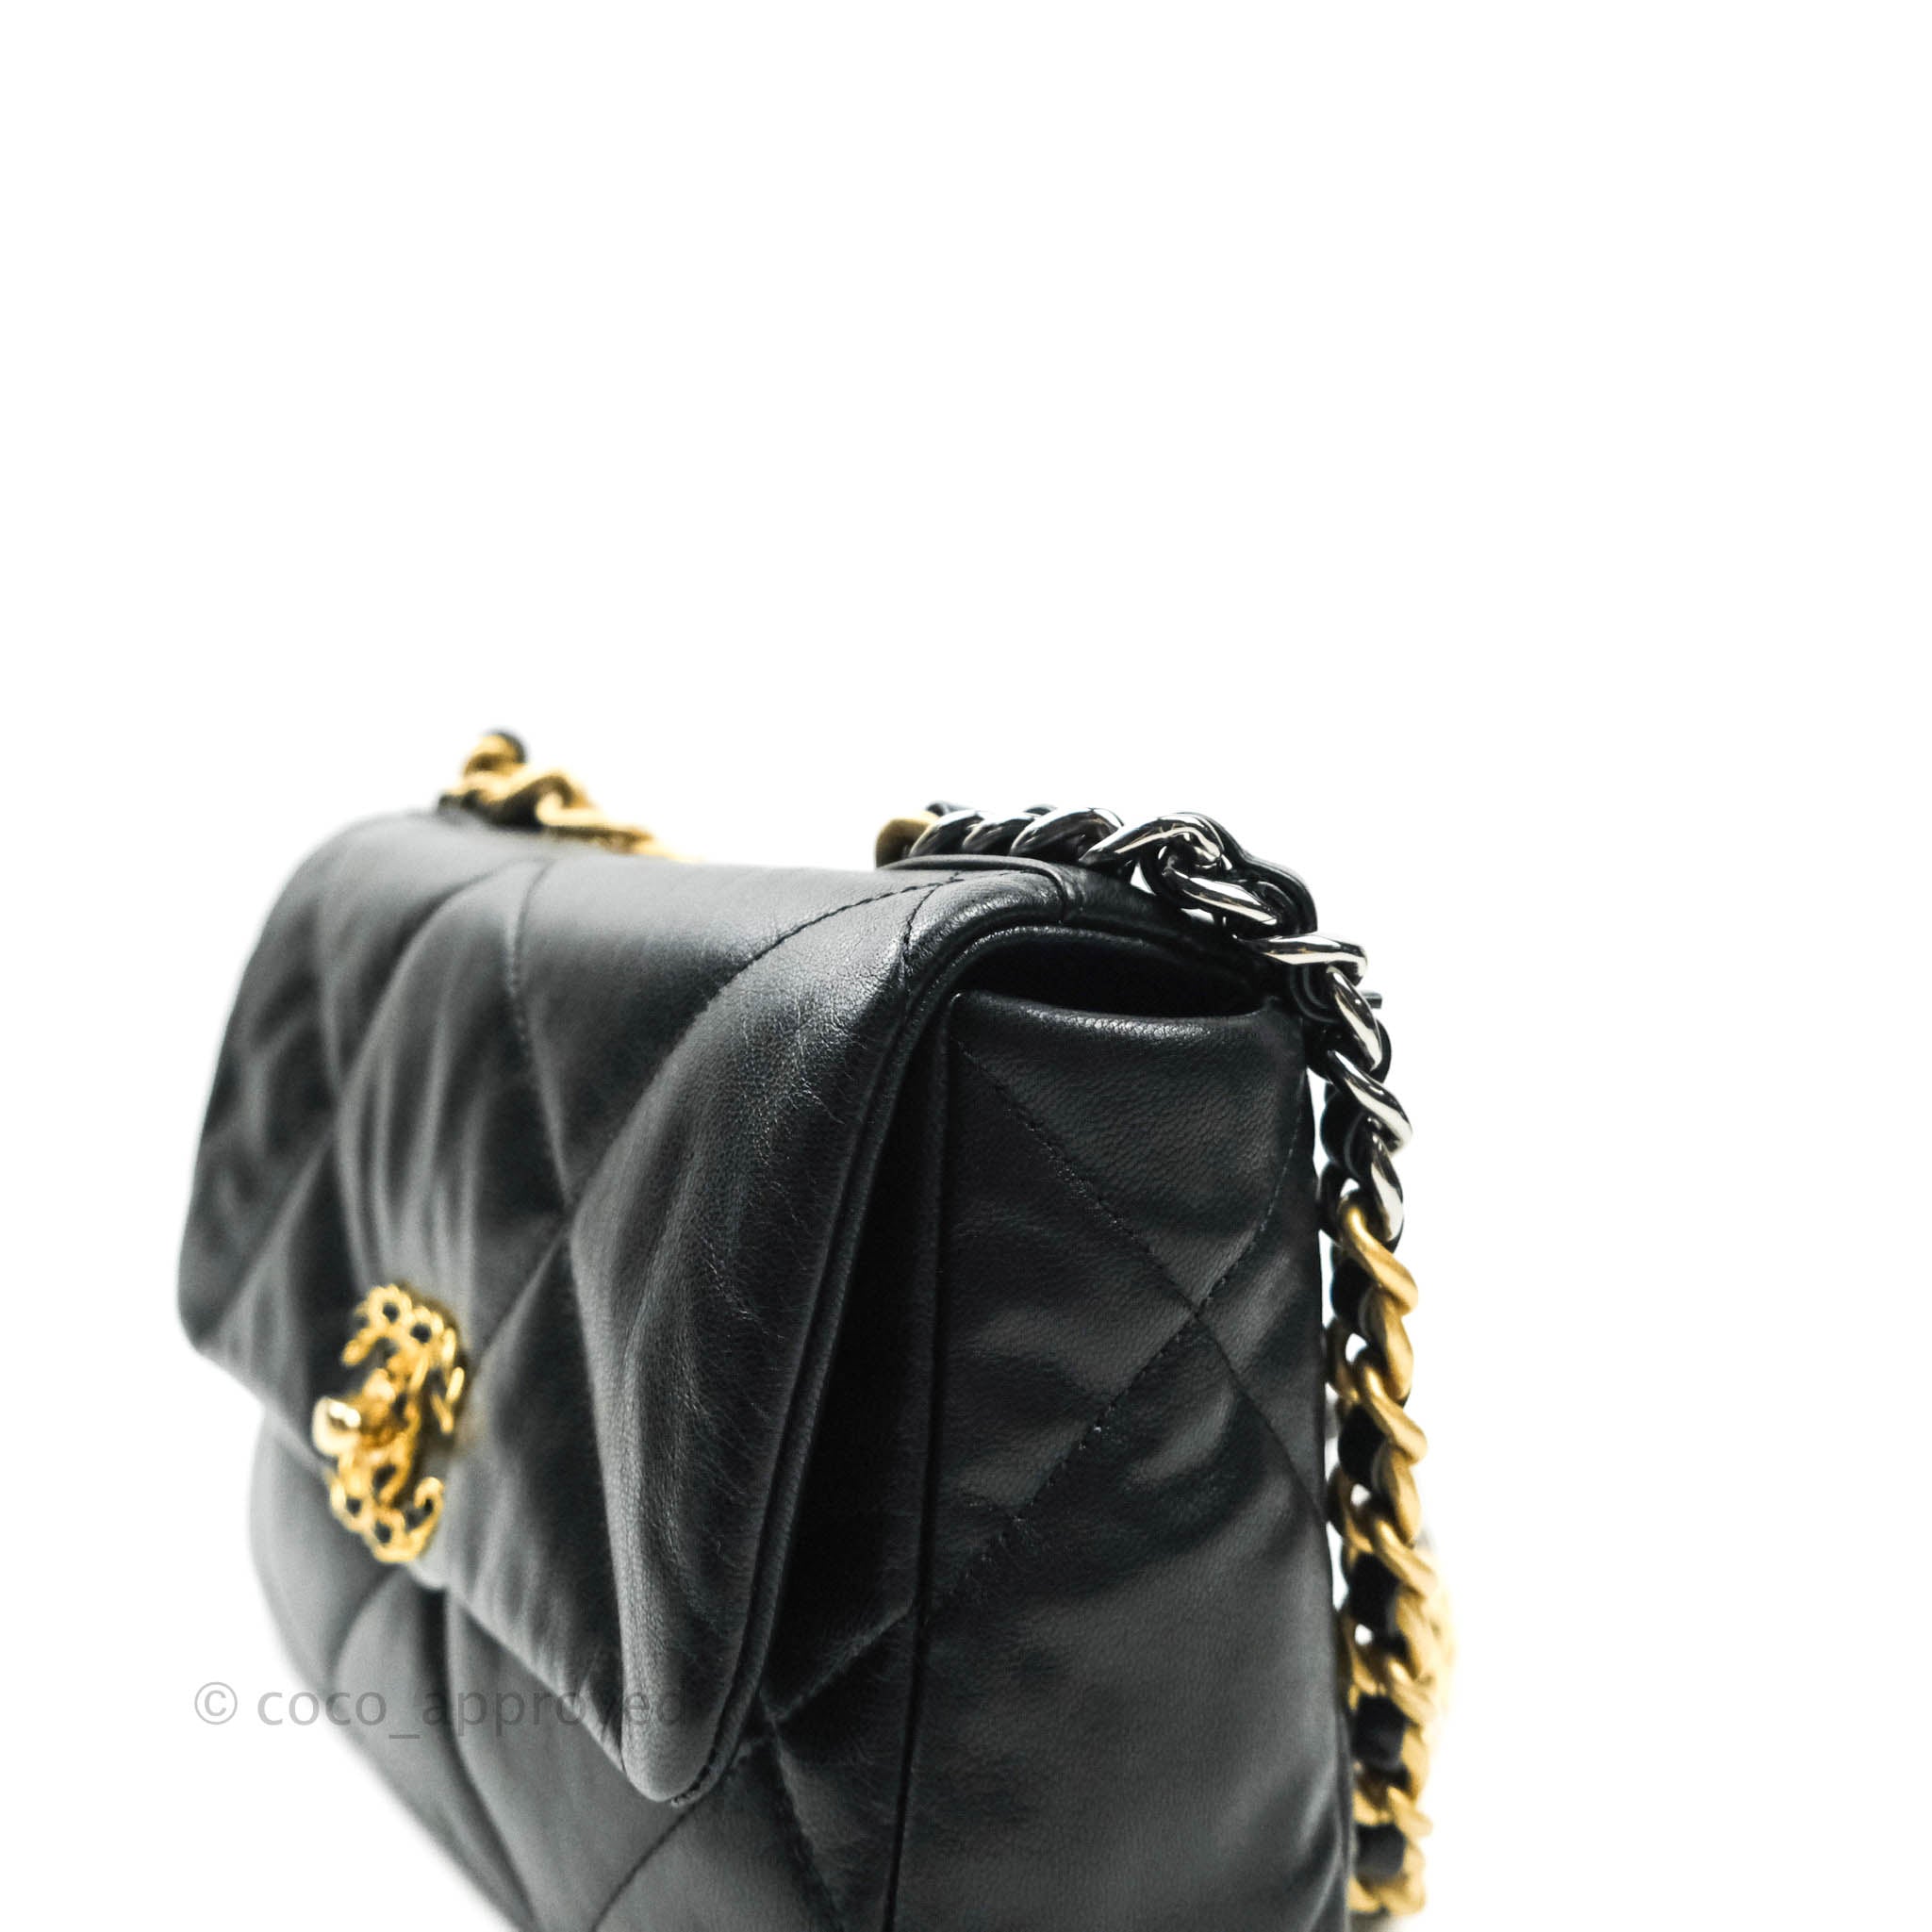 RARE* AUTHENTIC Chanel Small 19 Gray 20P Goatskin Classic Flap Bag